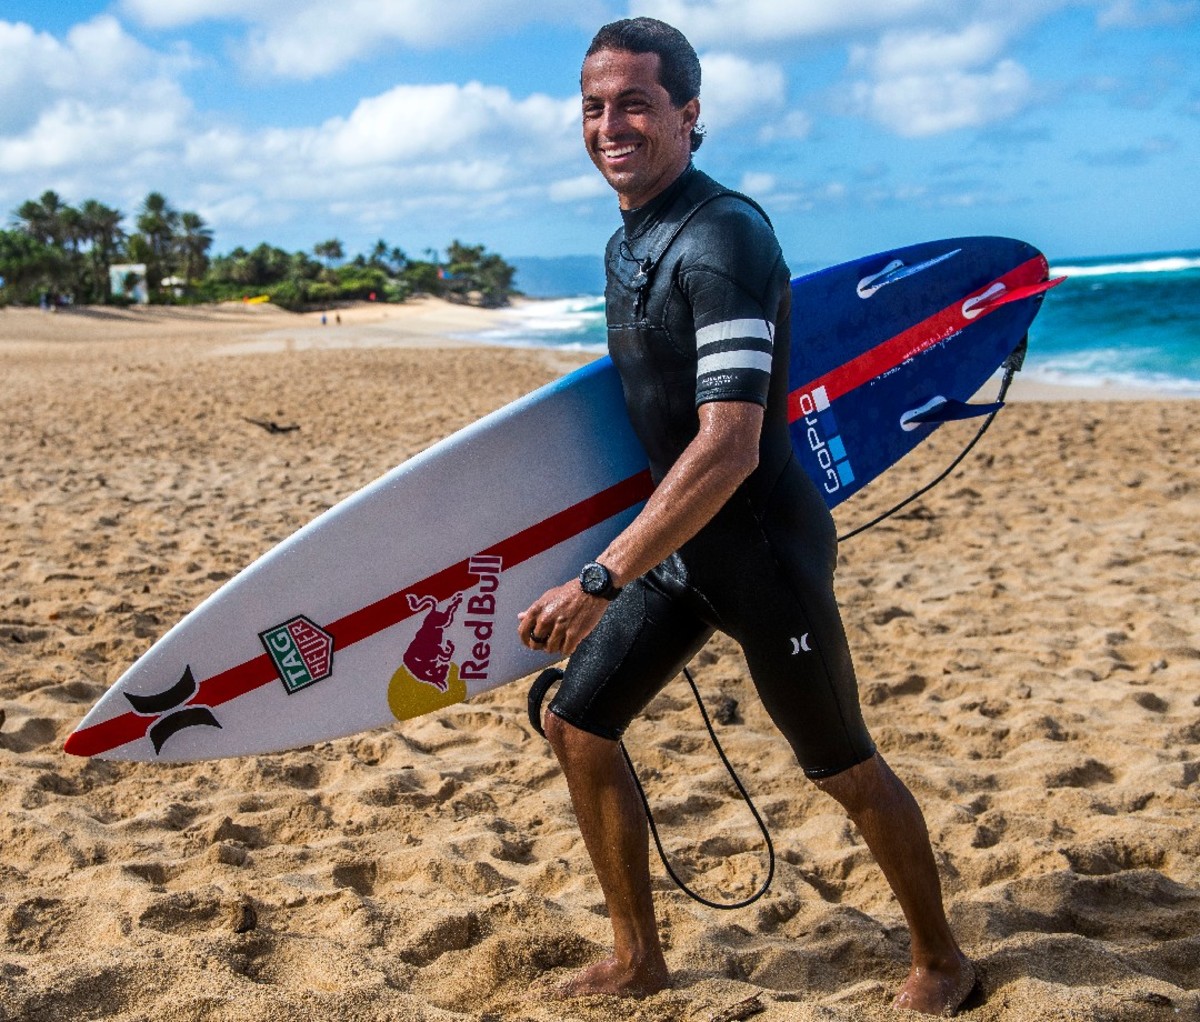 A smiling Kai Lenny walks along the beach holding his surfboard.